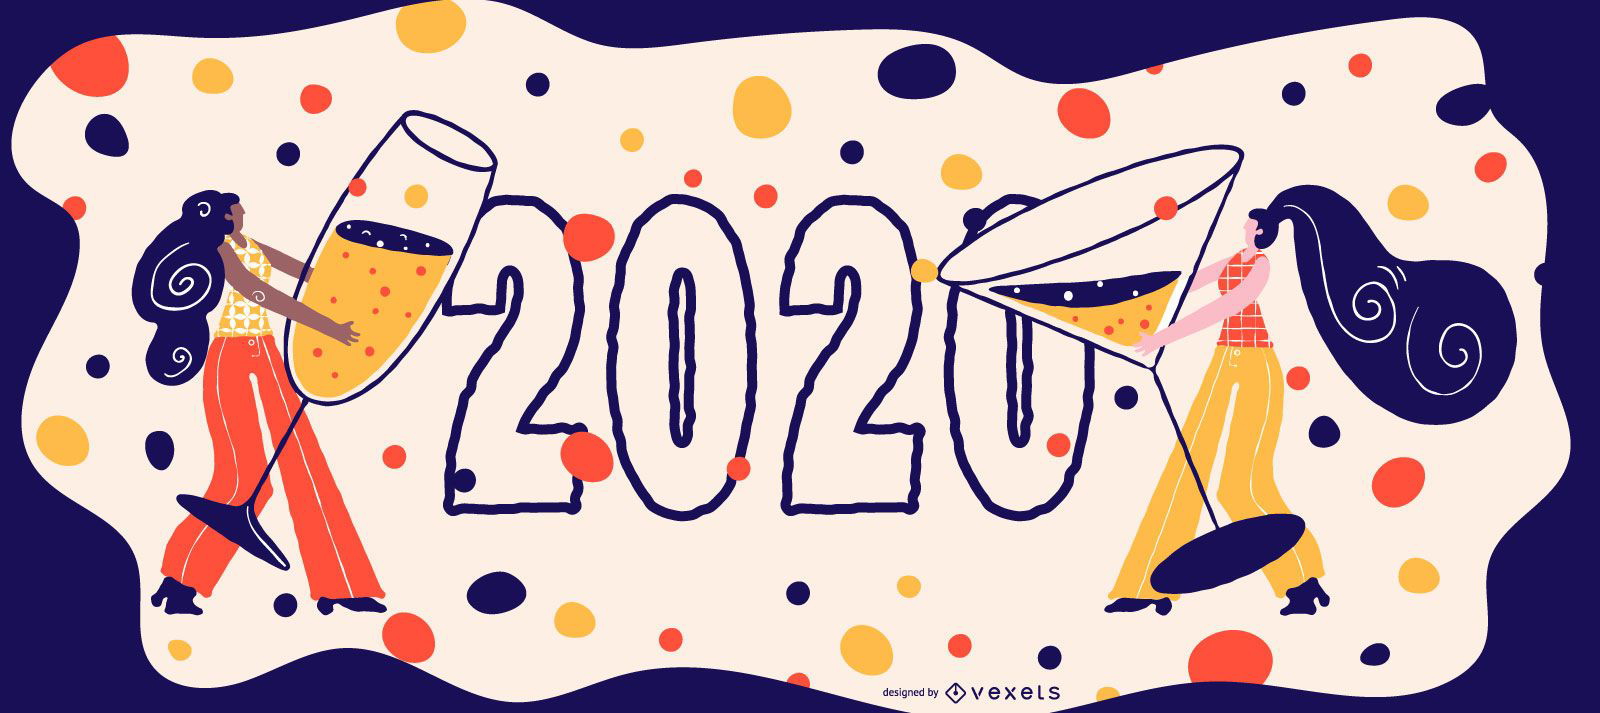 Happy 2020 Celebration Banner Design